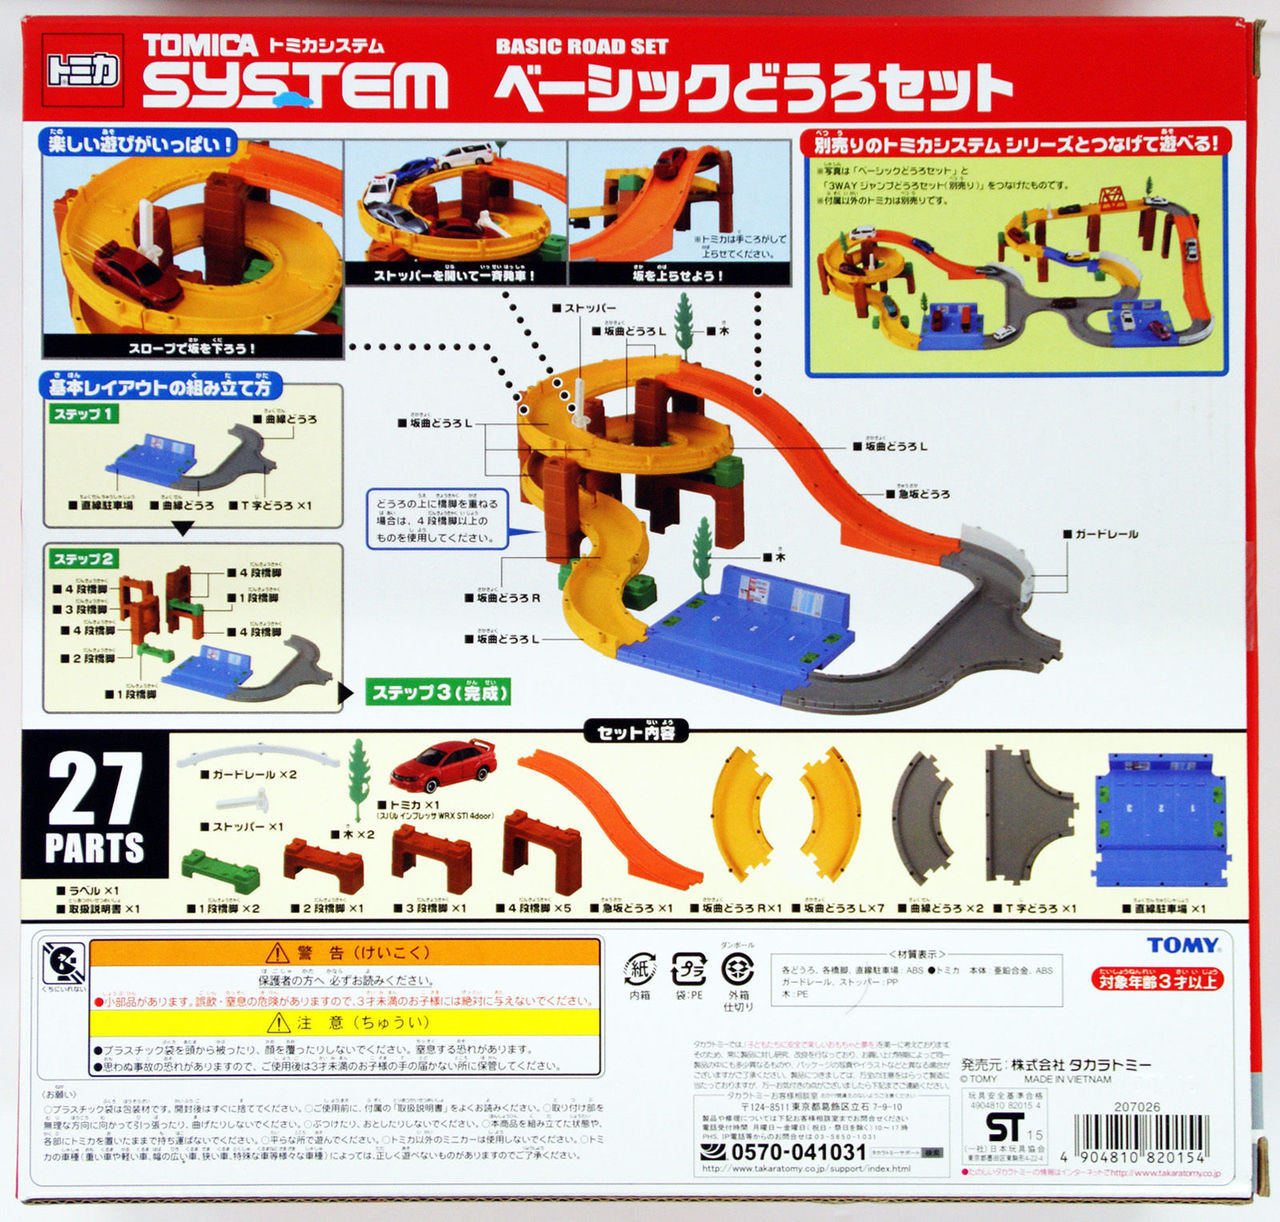 Takara Tomy Tomica System 0154 Basic Road Set With Subaru Impreza Plaza Japan